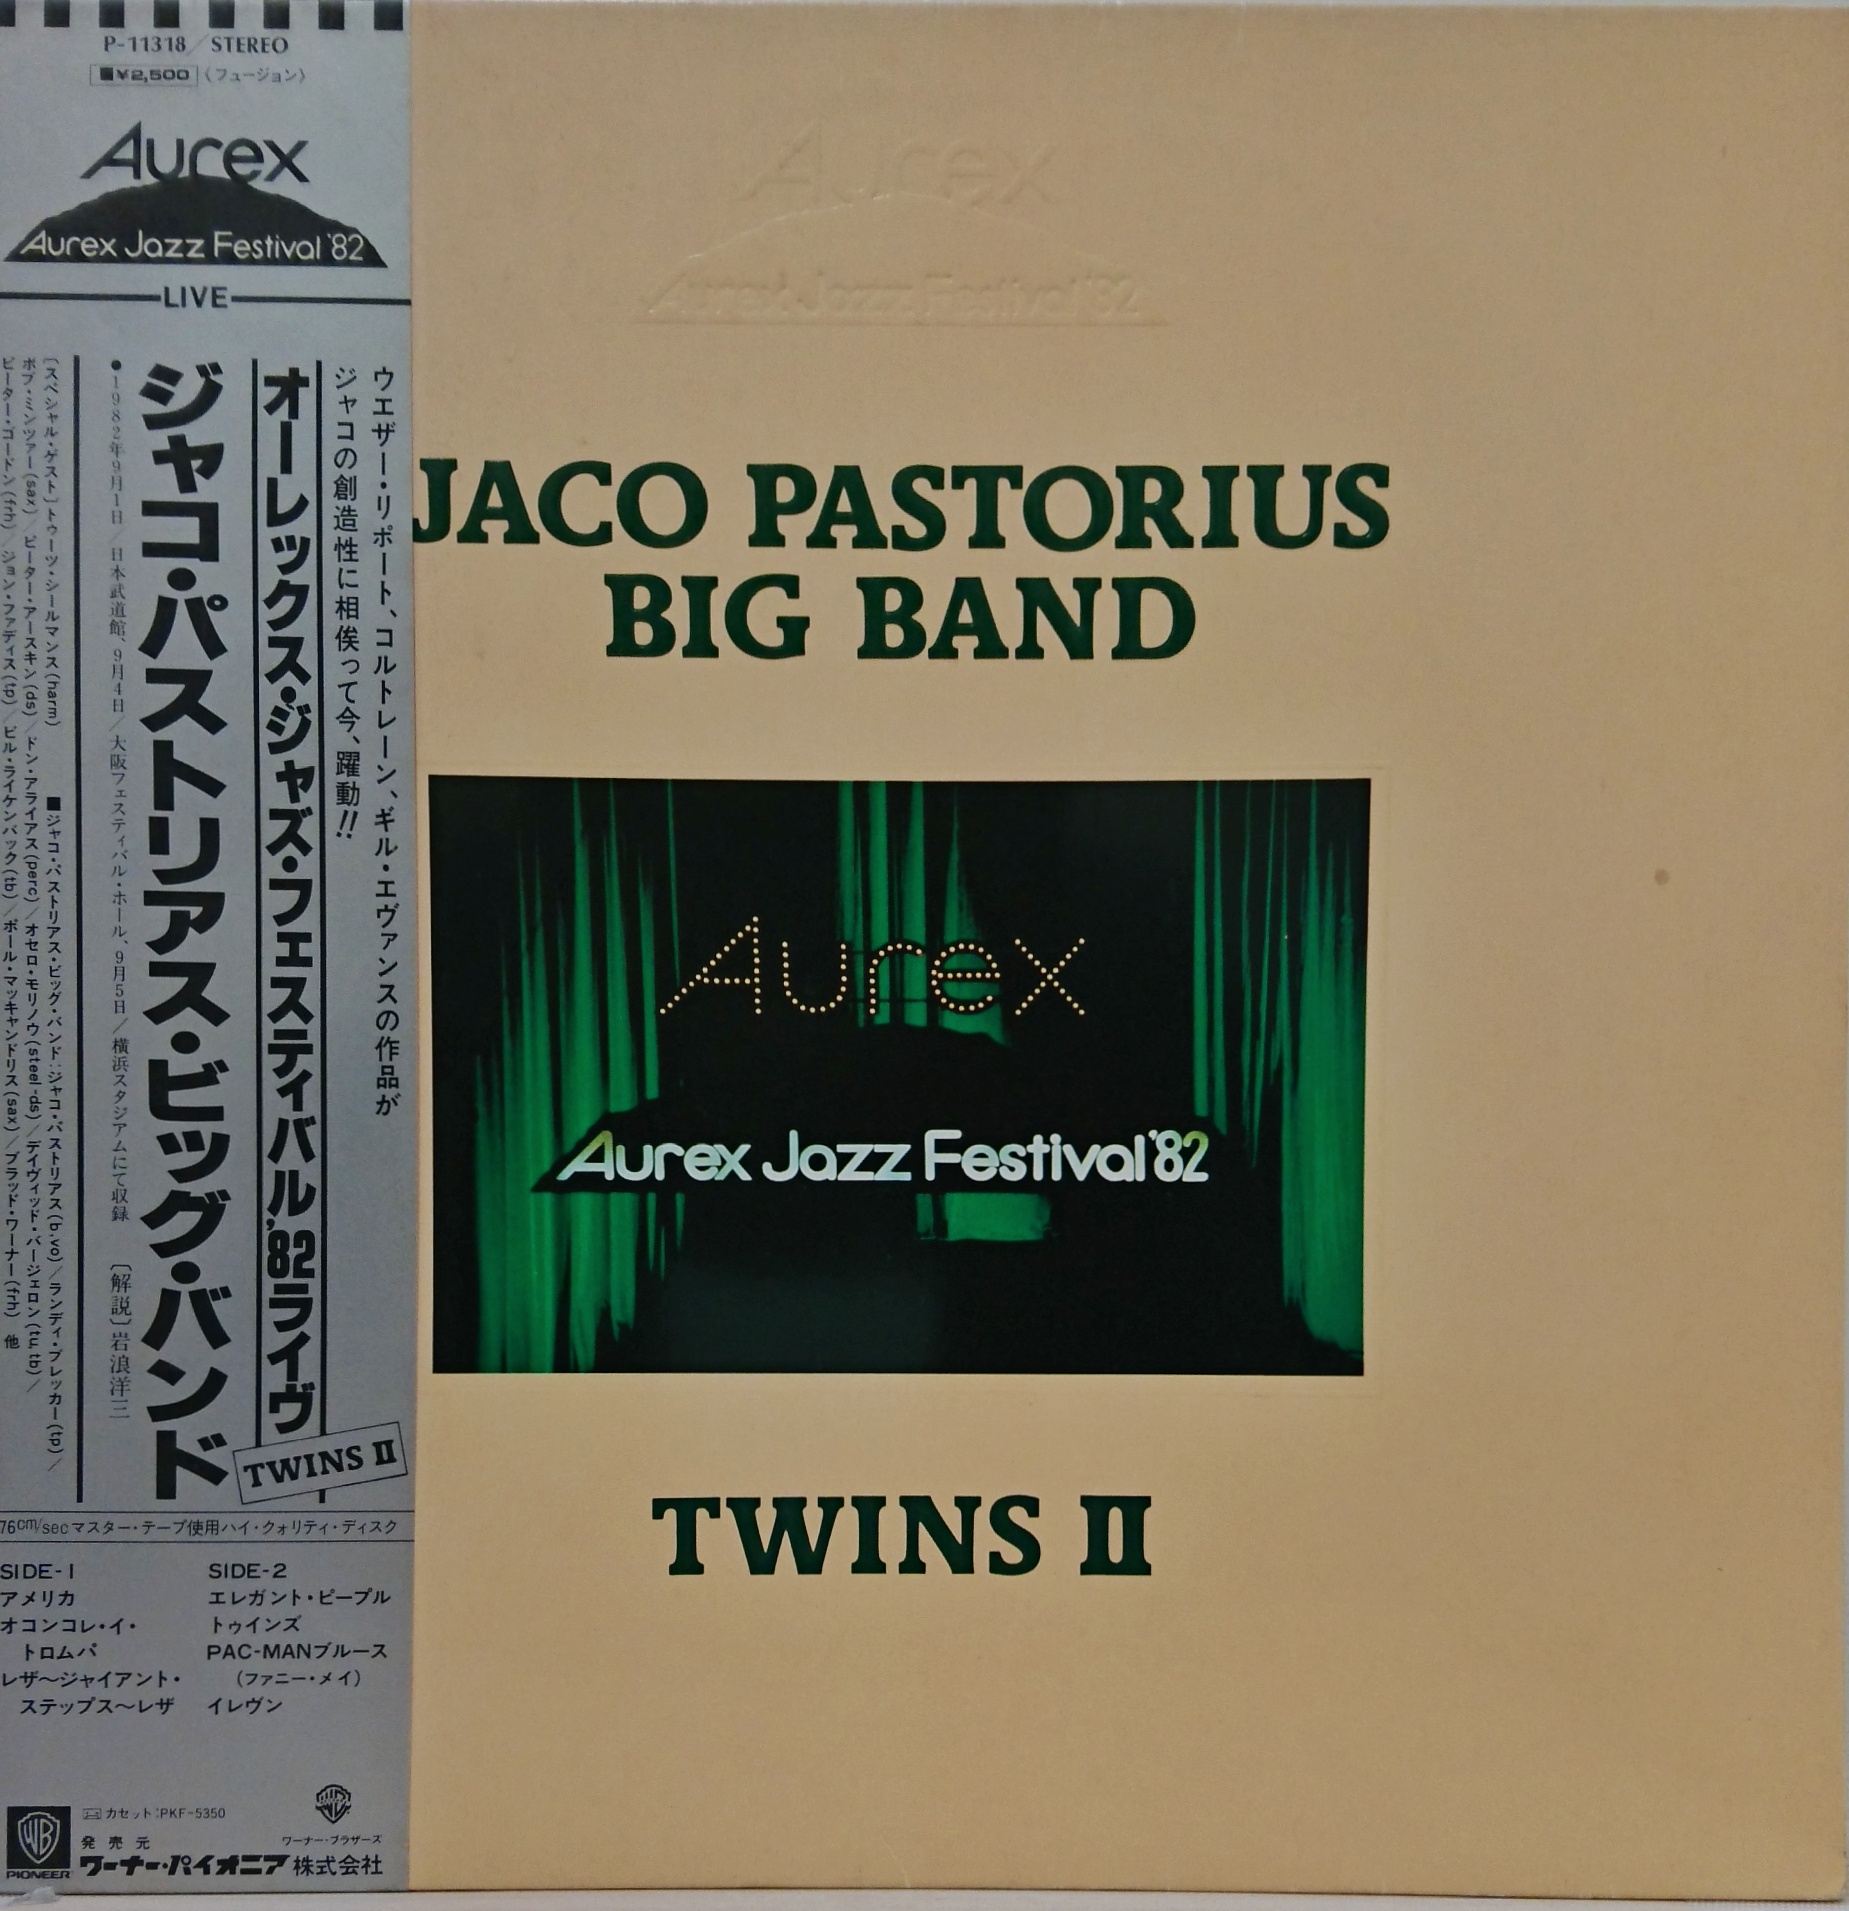 Jaco Pastorius Big Band / Twins II (Aurex Jazz Festival '82 